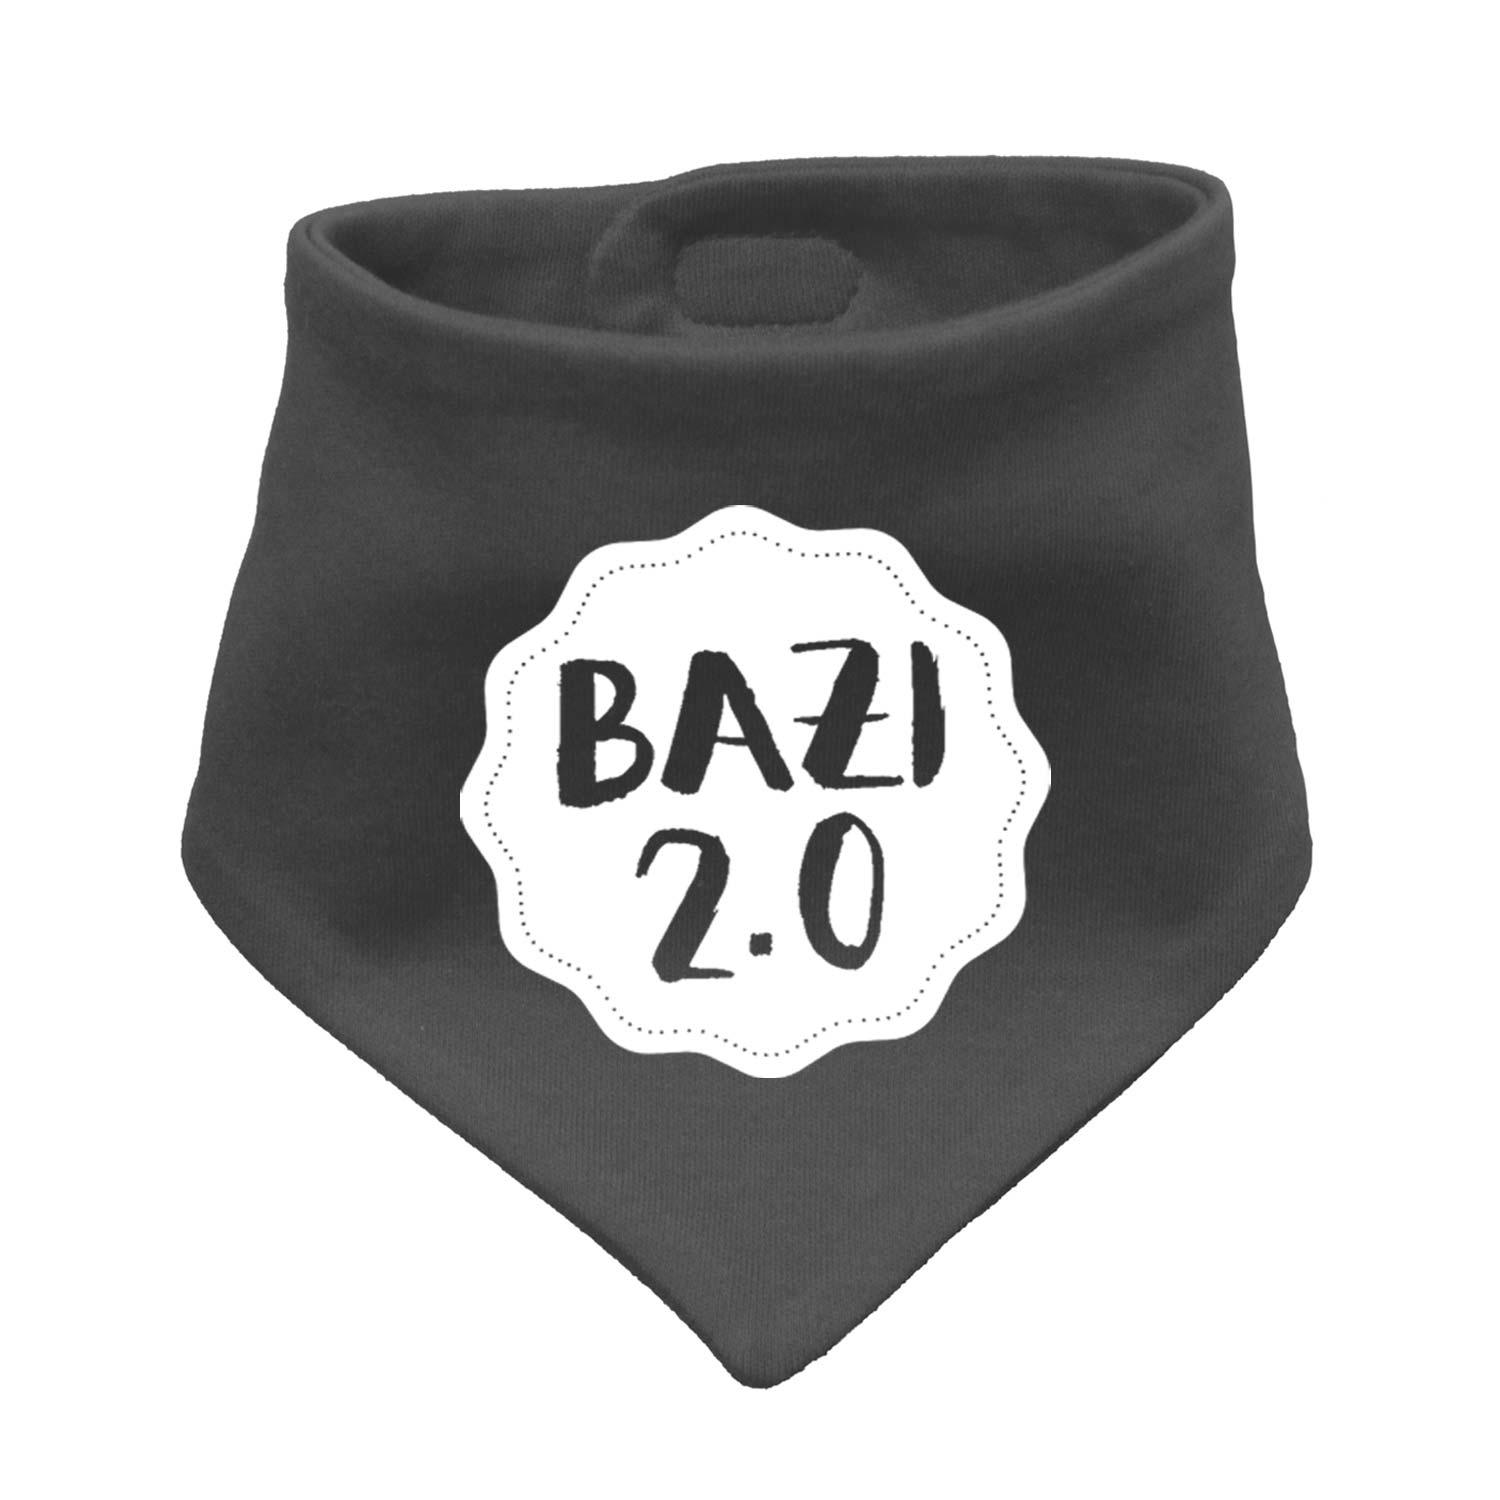 Babyhalstuch "Bazi 2.0" - bavariashop - mei LebensGfui